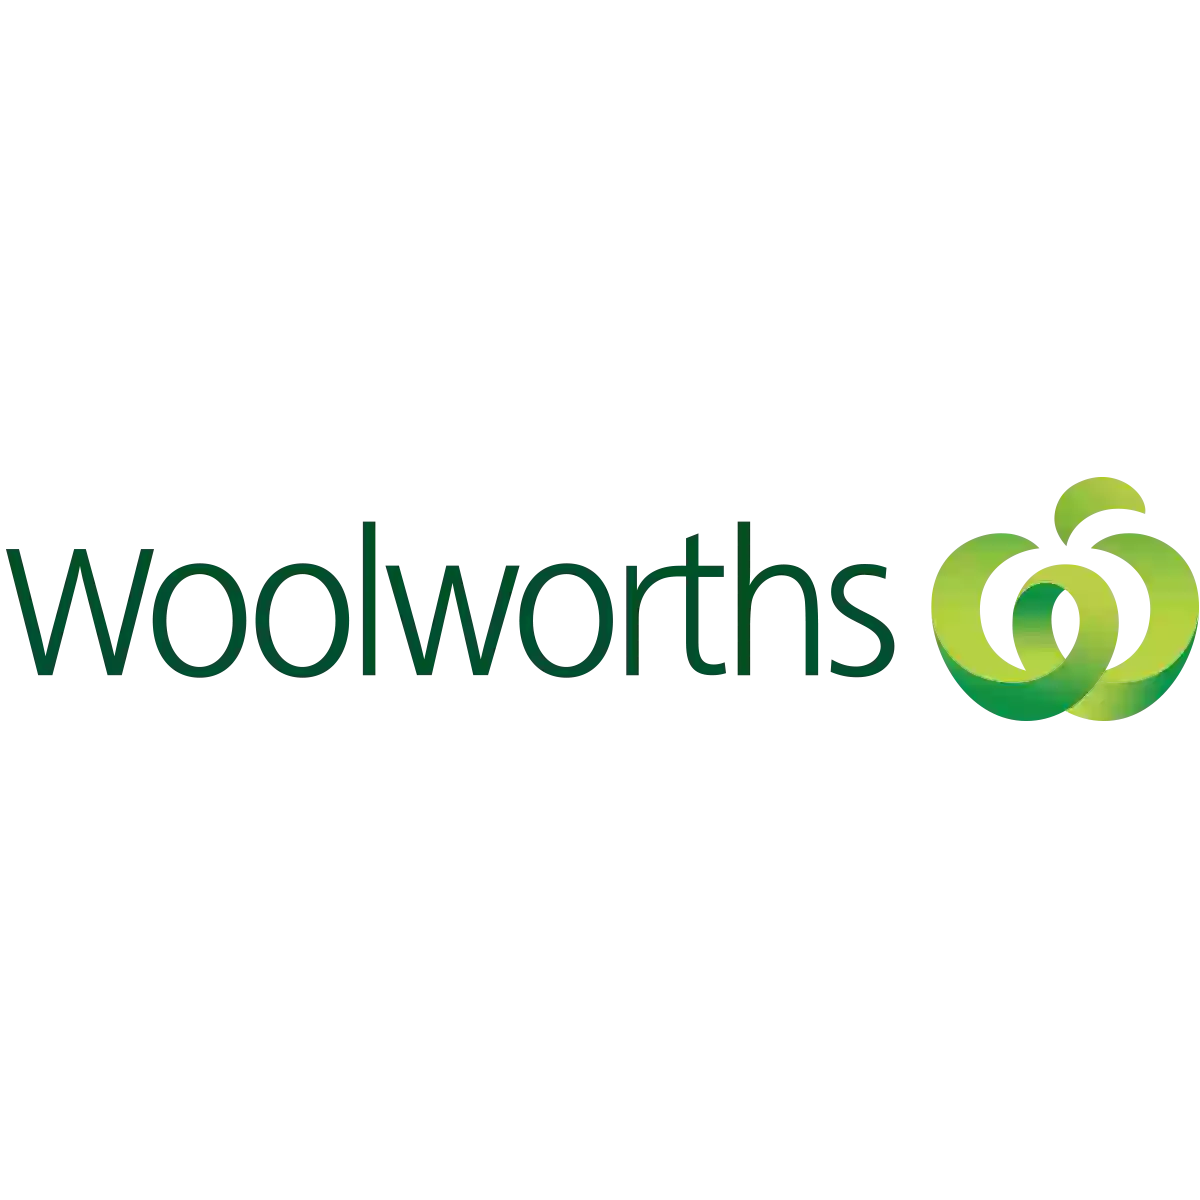 Woolworths Nightcliff